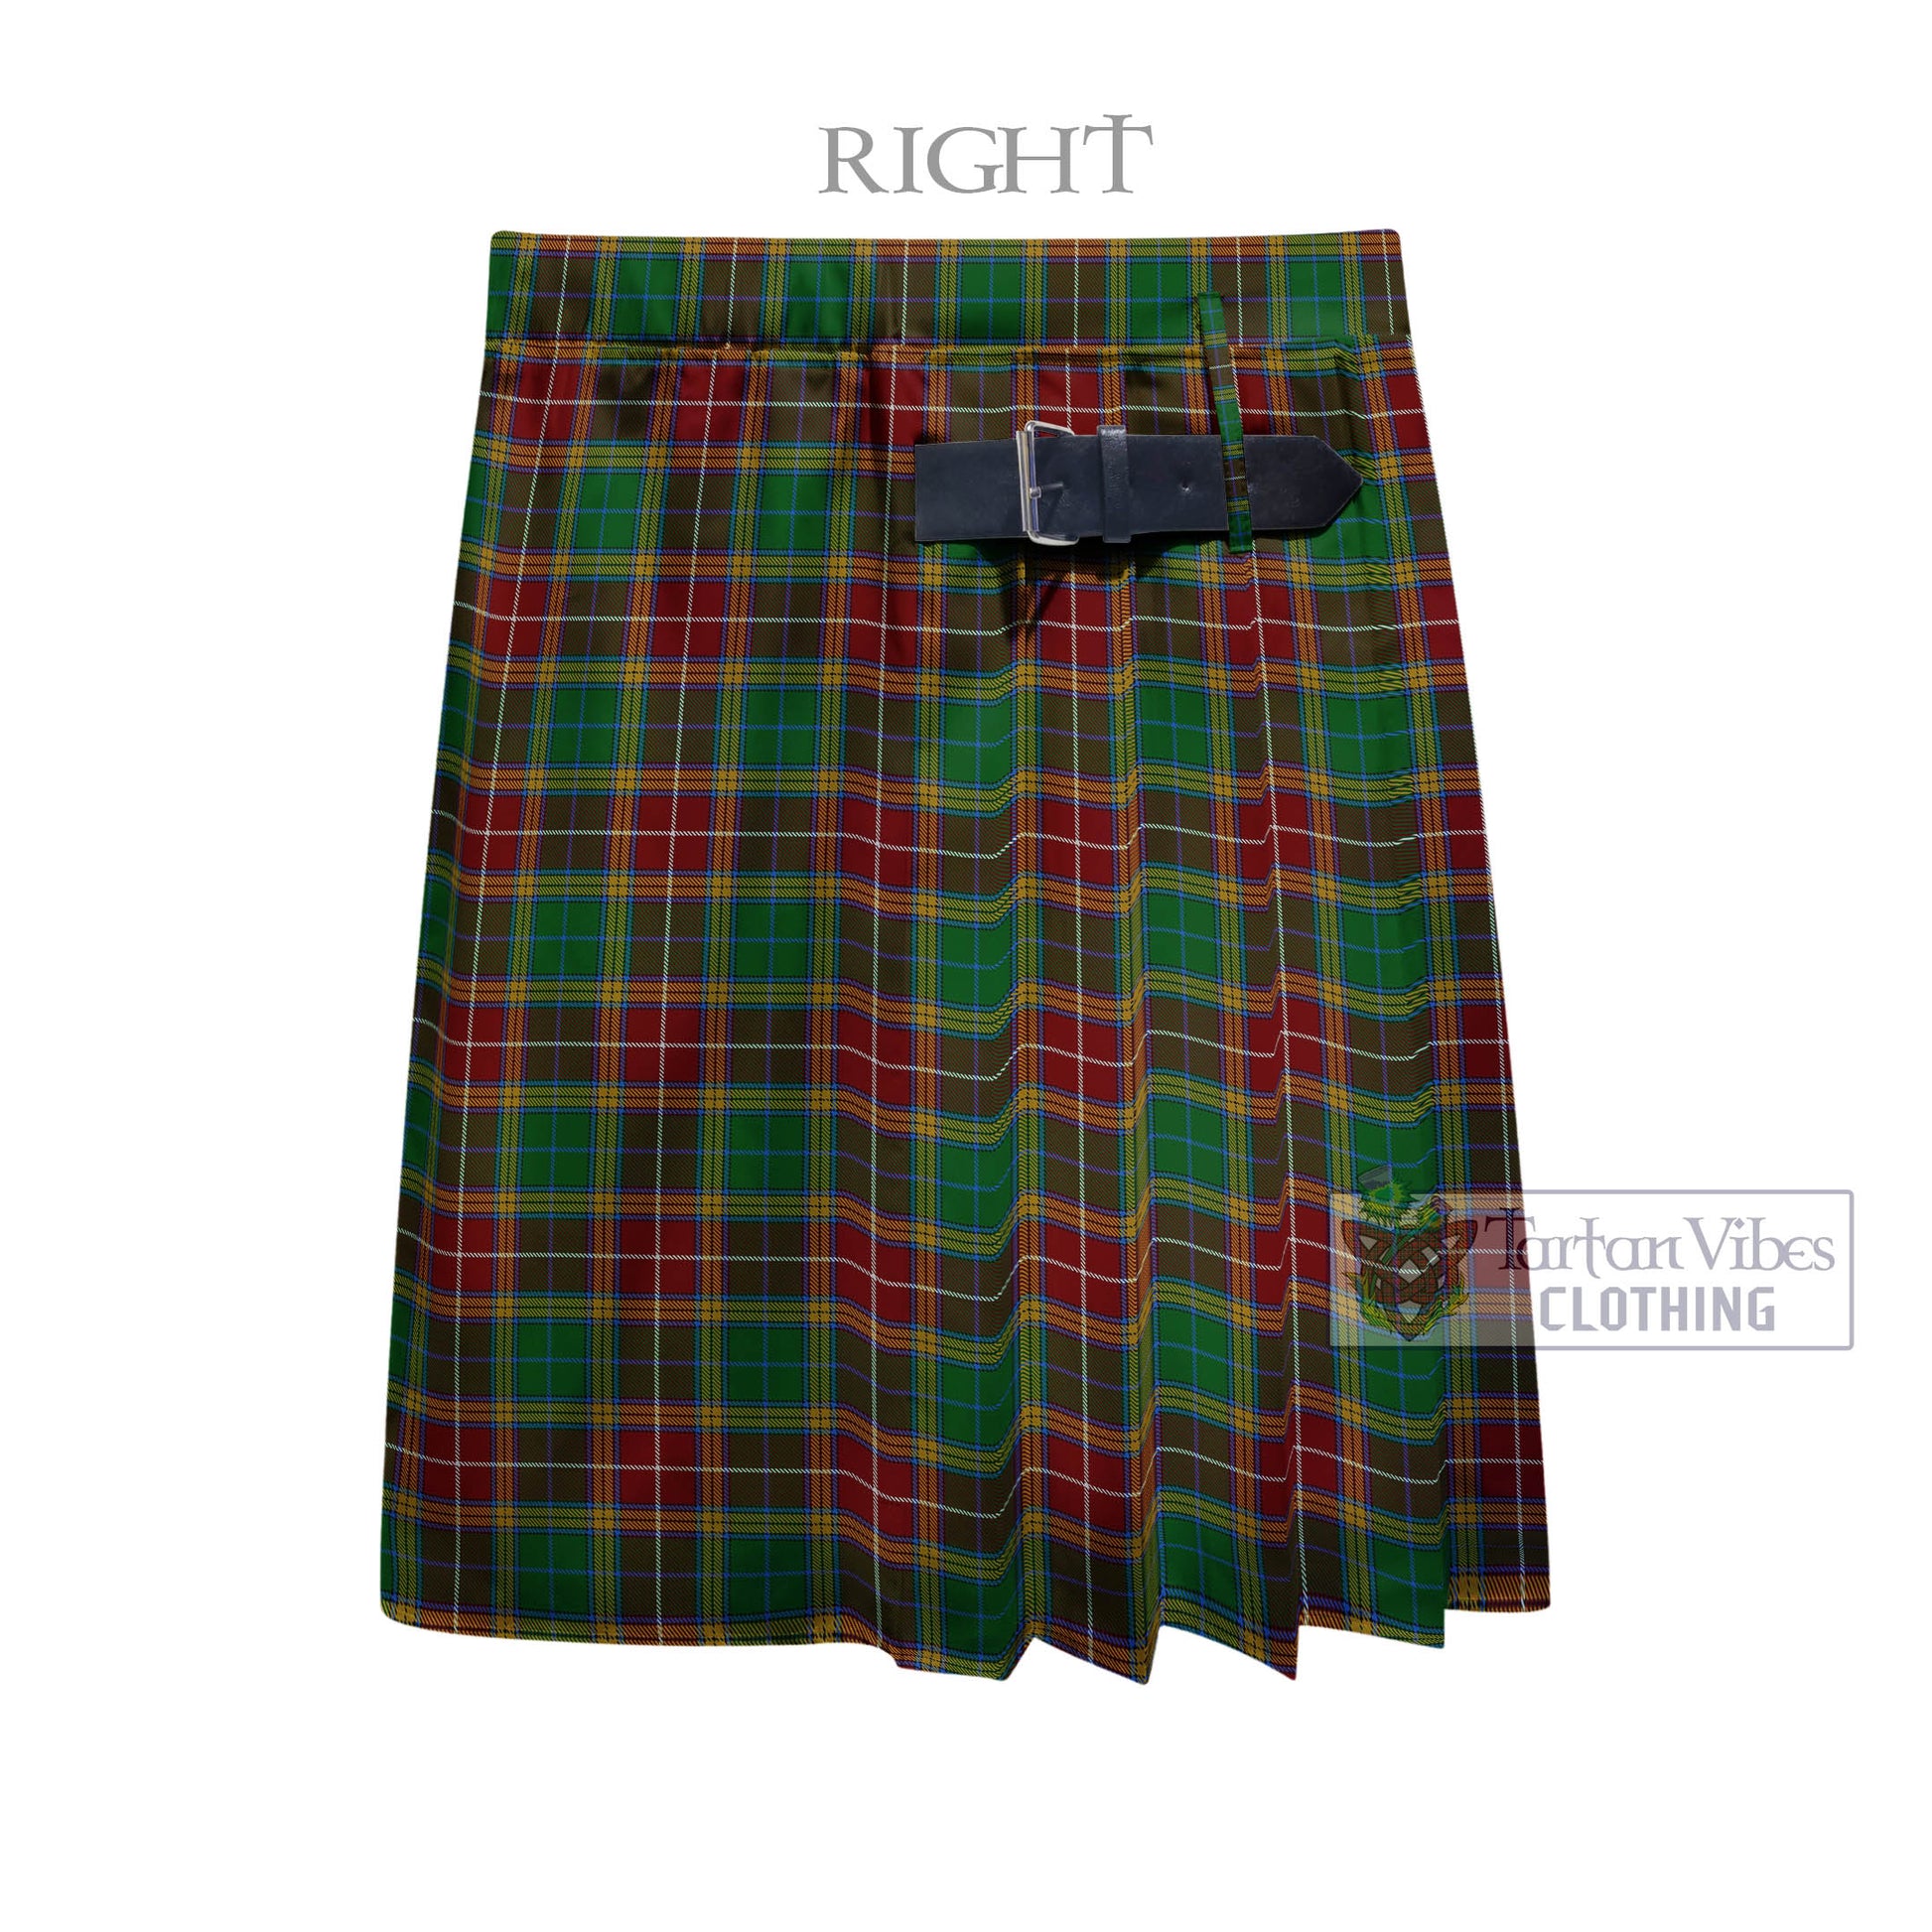 Tartan Vibes Clothing Baxter Tartan Men's Pleated Skirt - Fashion Casual Retro Scottish Style